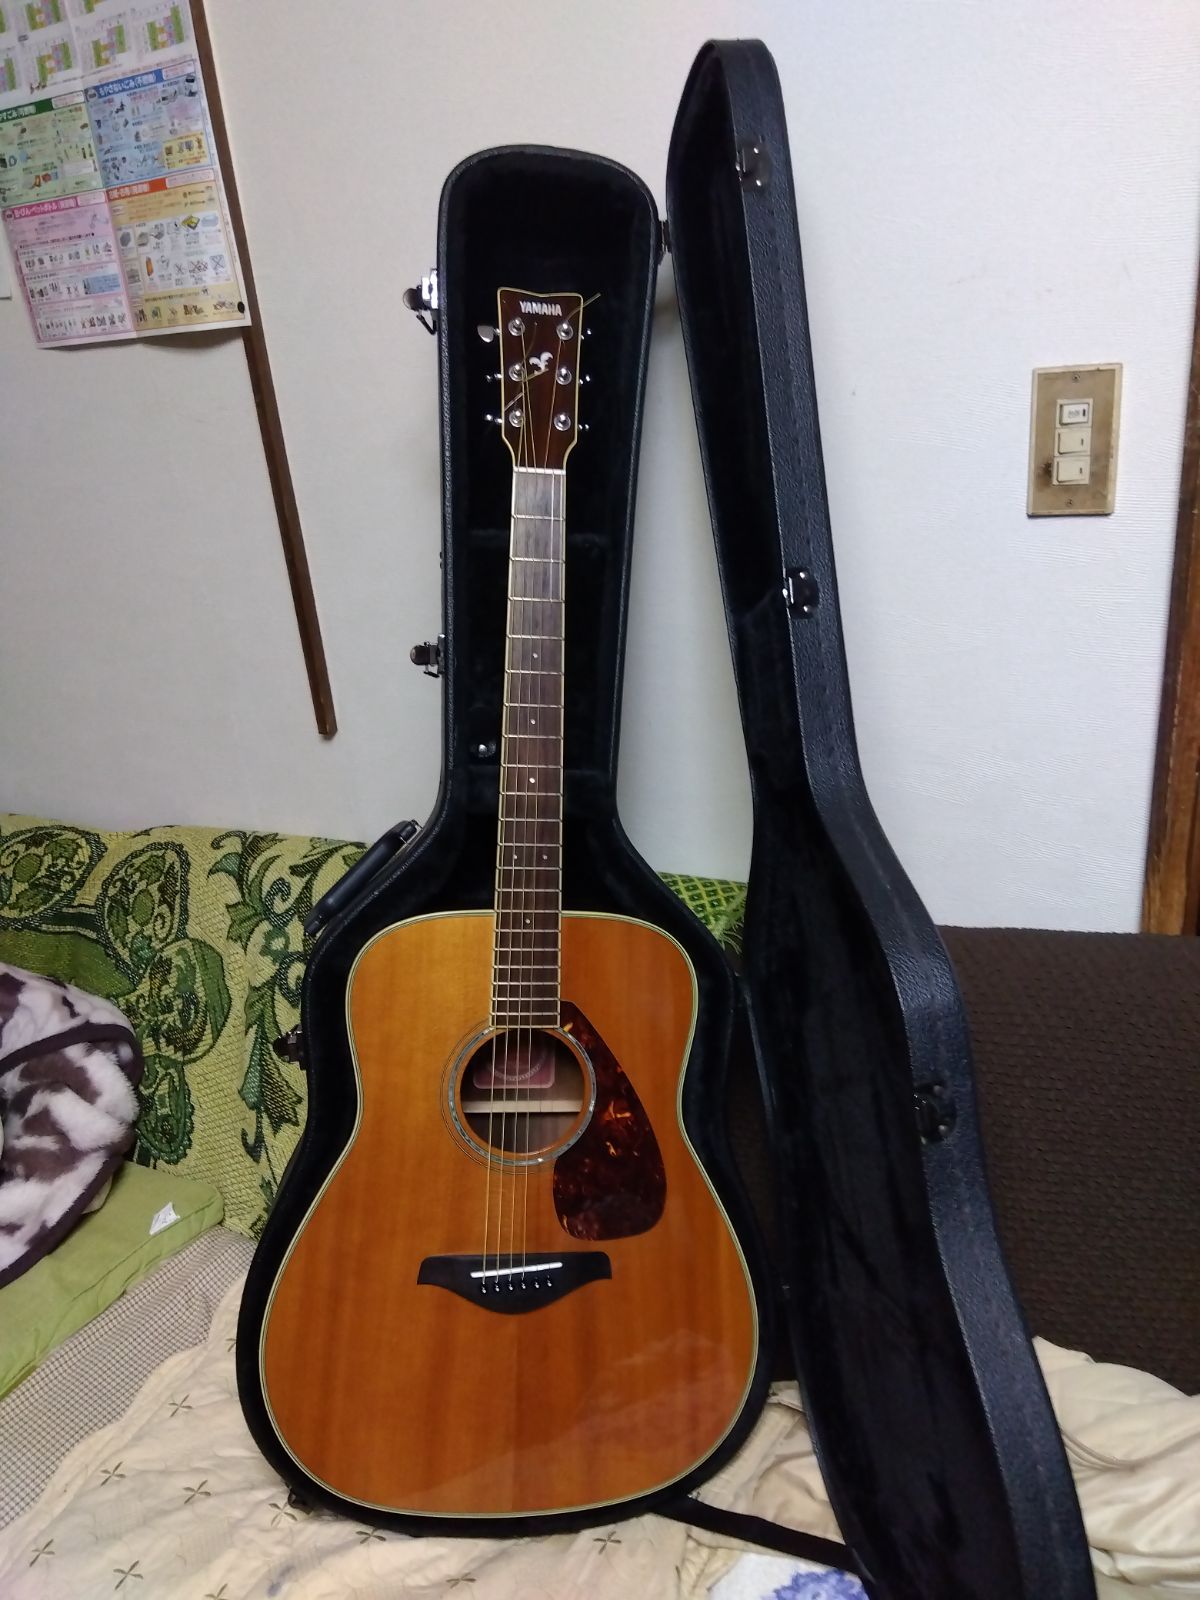 YAMAHA FG730S アコースティックギター - 楽器/器材